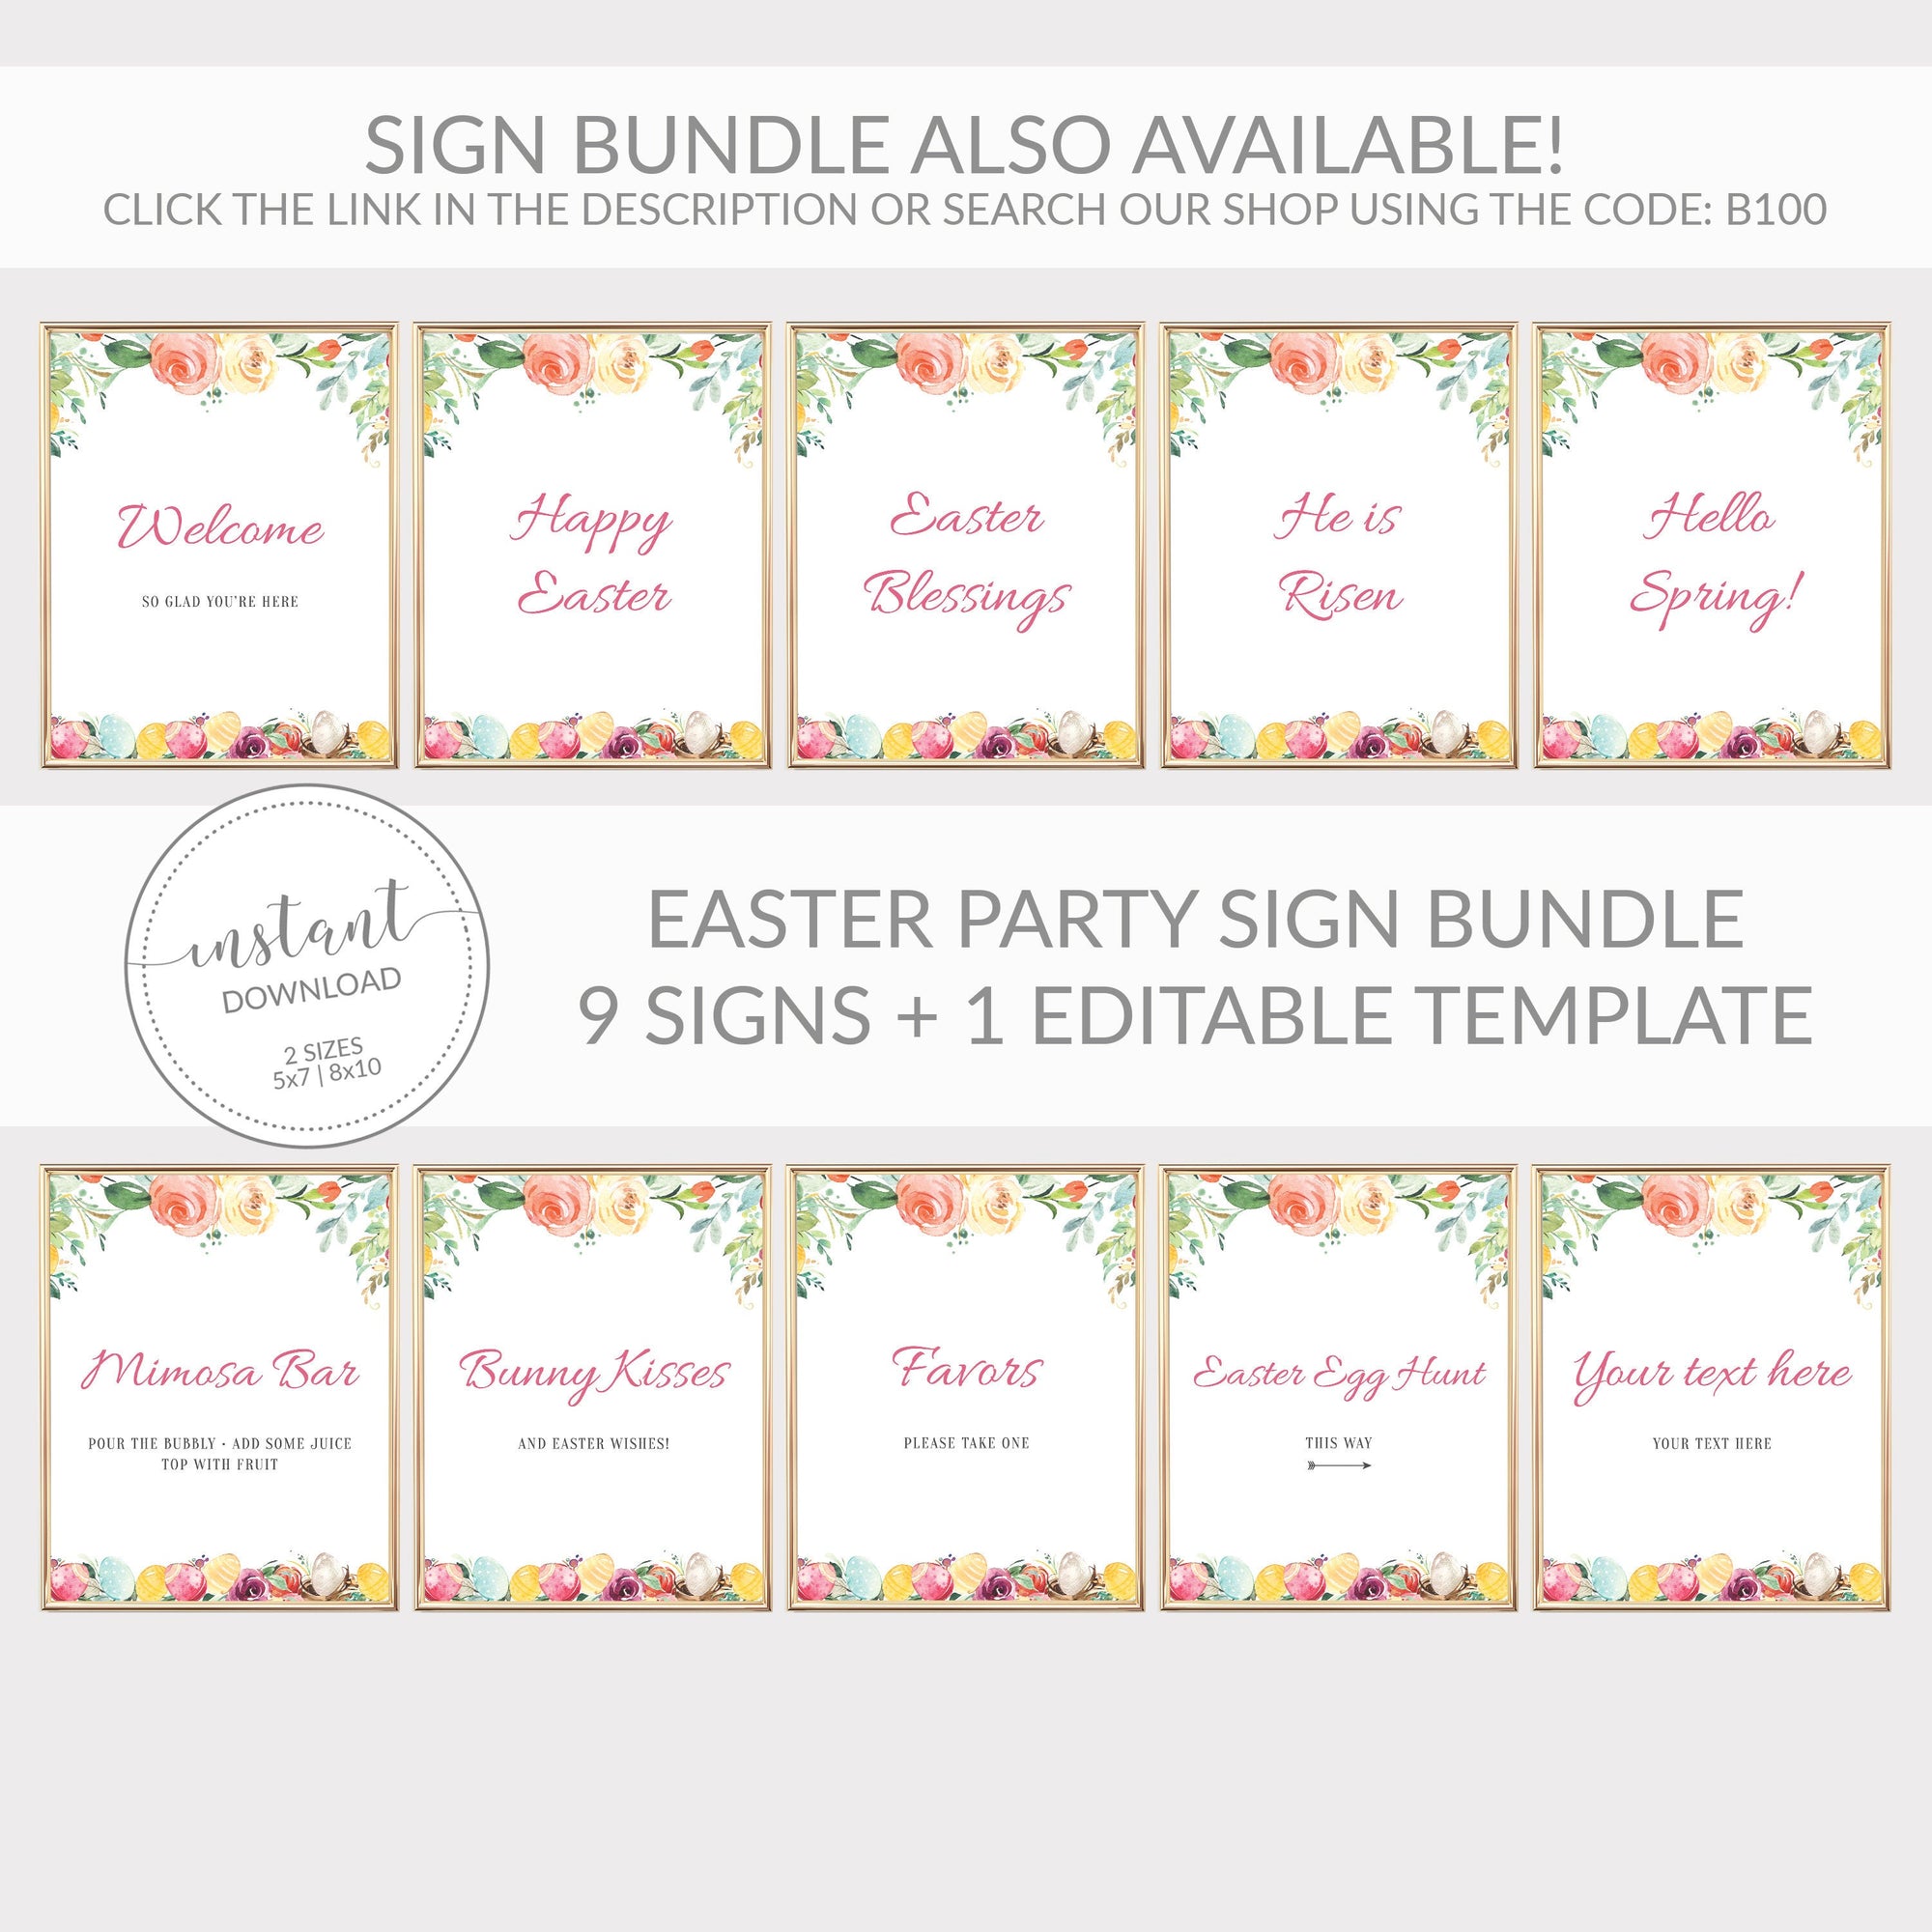 Easter Welcome Sign Printable, Easter Decorations, Easter Party Decorations, Easter Party Supplies, DIGITAL DOWNLOAD B100